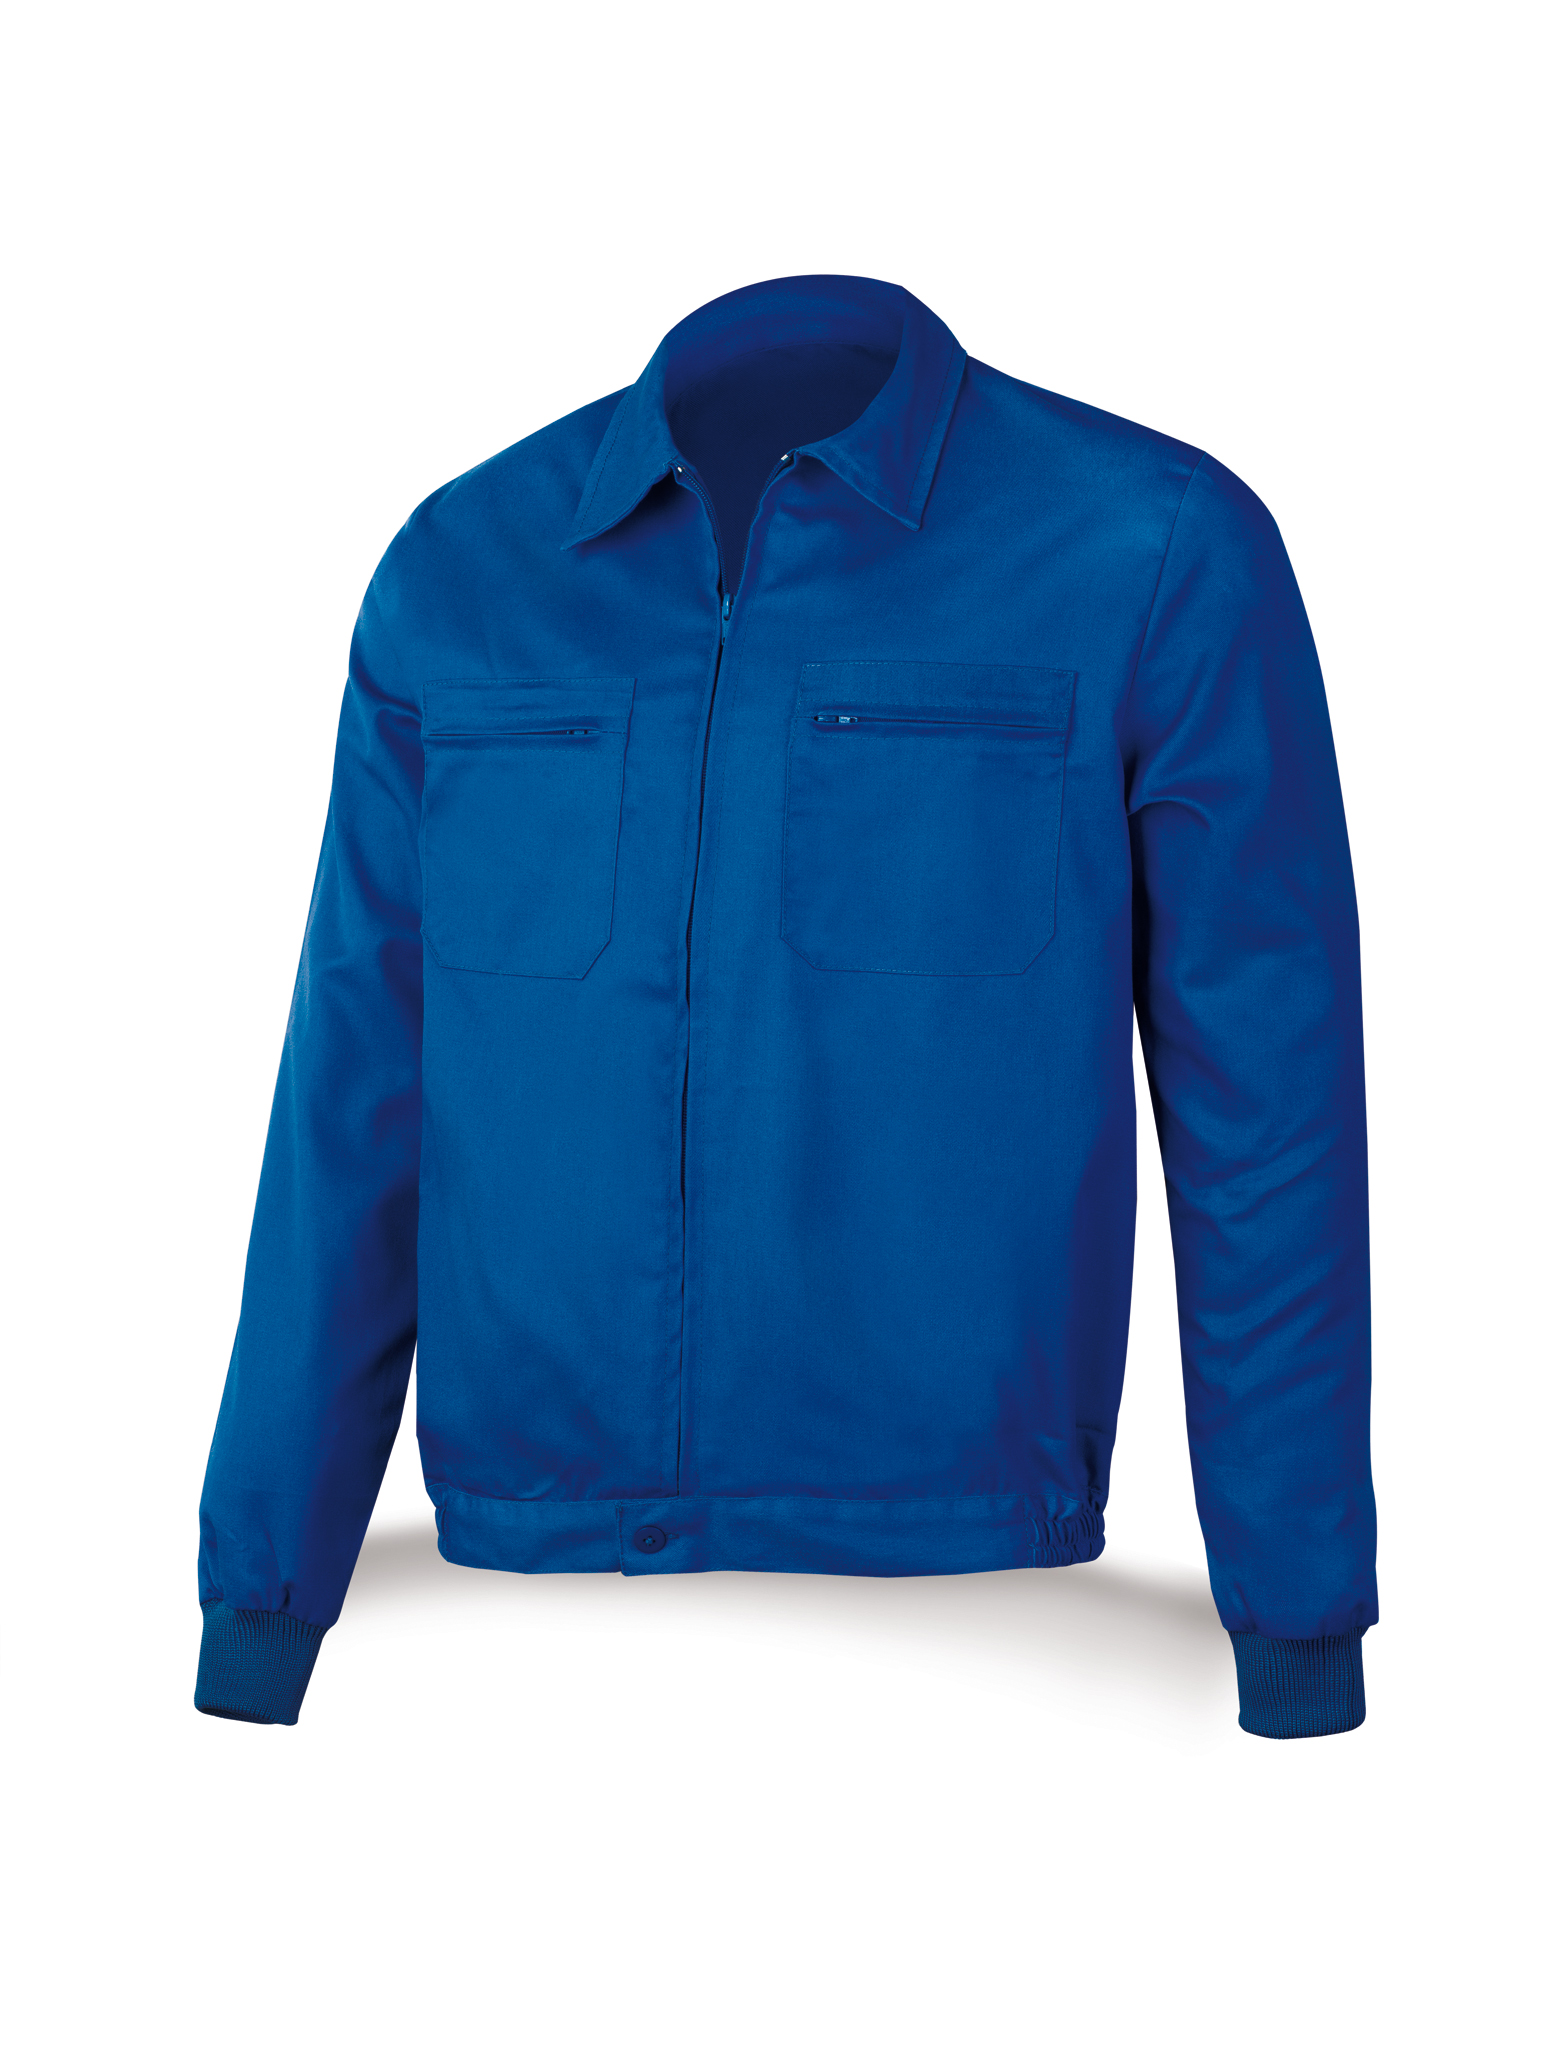 388-CE Workwear Basic Line 100% Cotton. Royal blue.